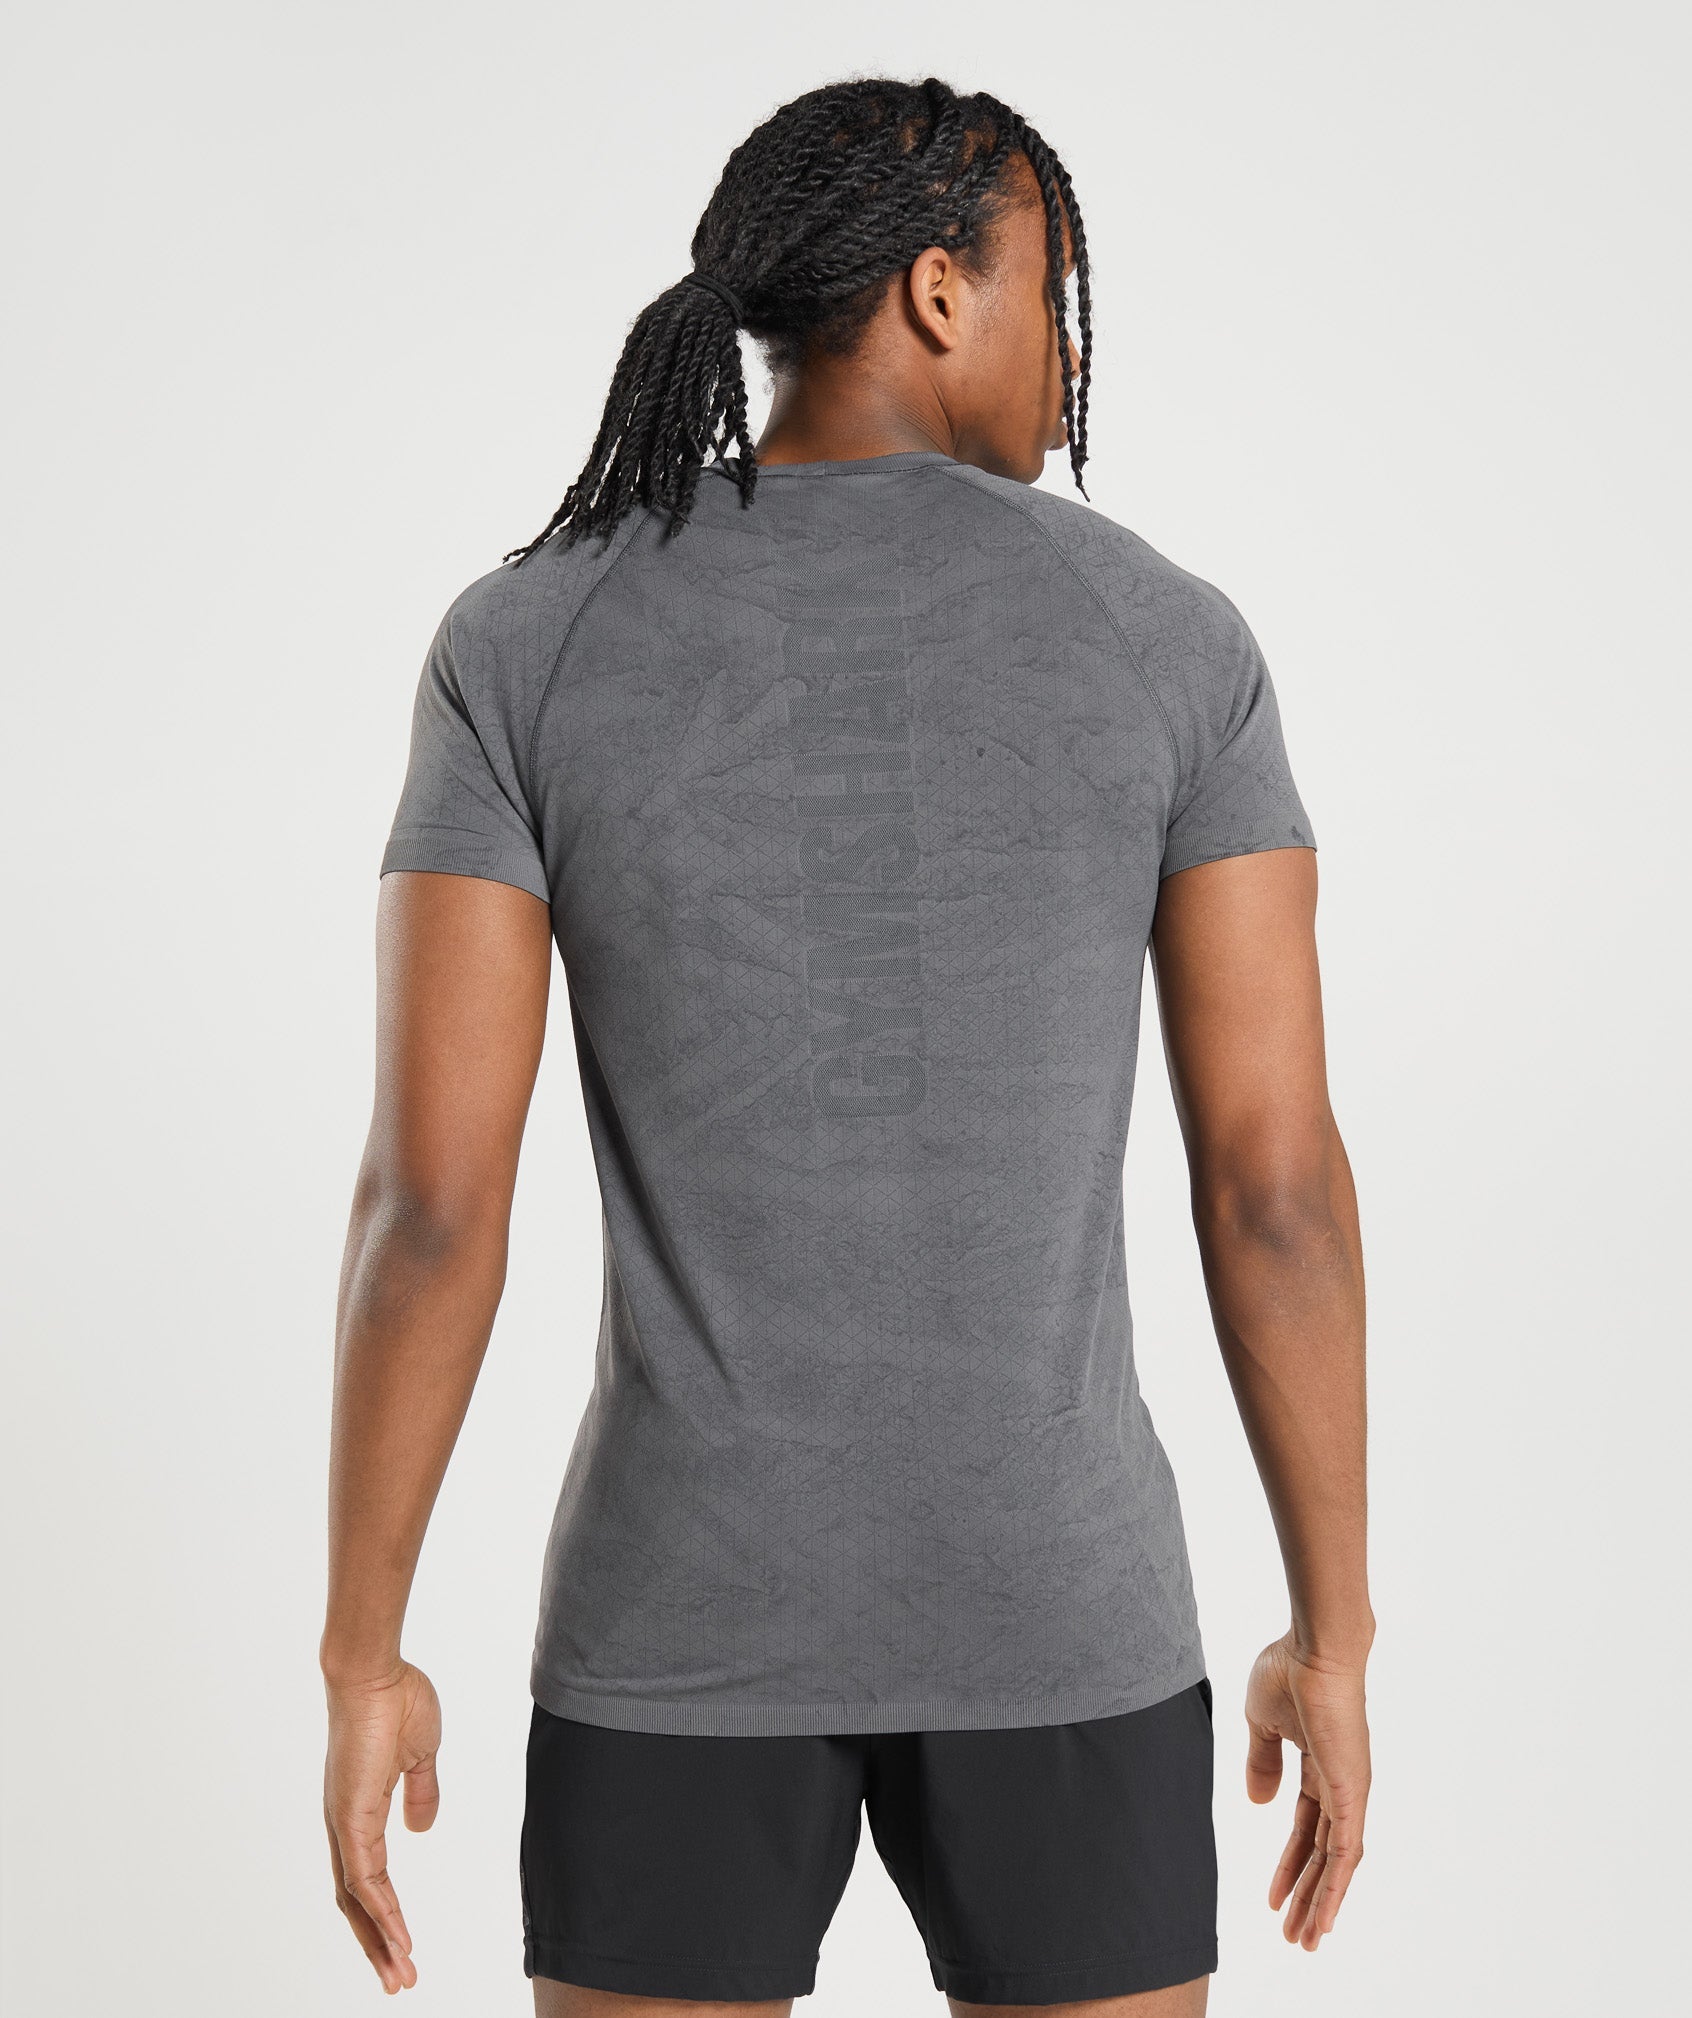 Gymshark Geo Seamless T-Shirt - Charcoal Grey/Black